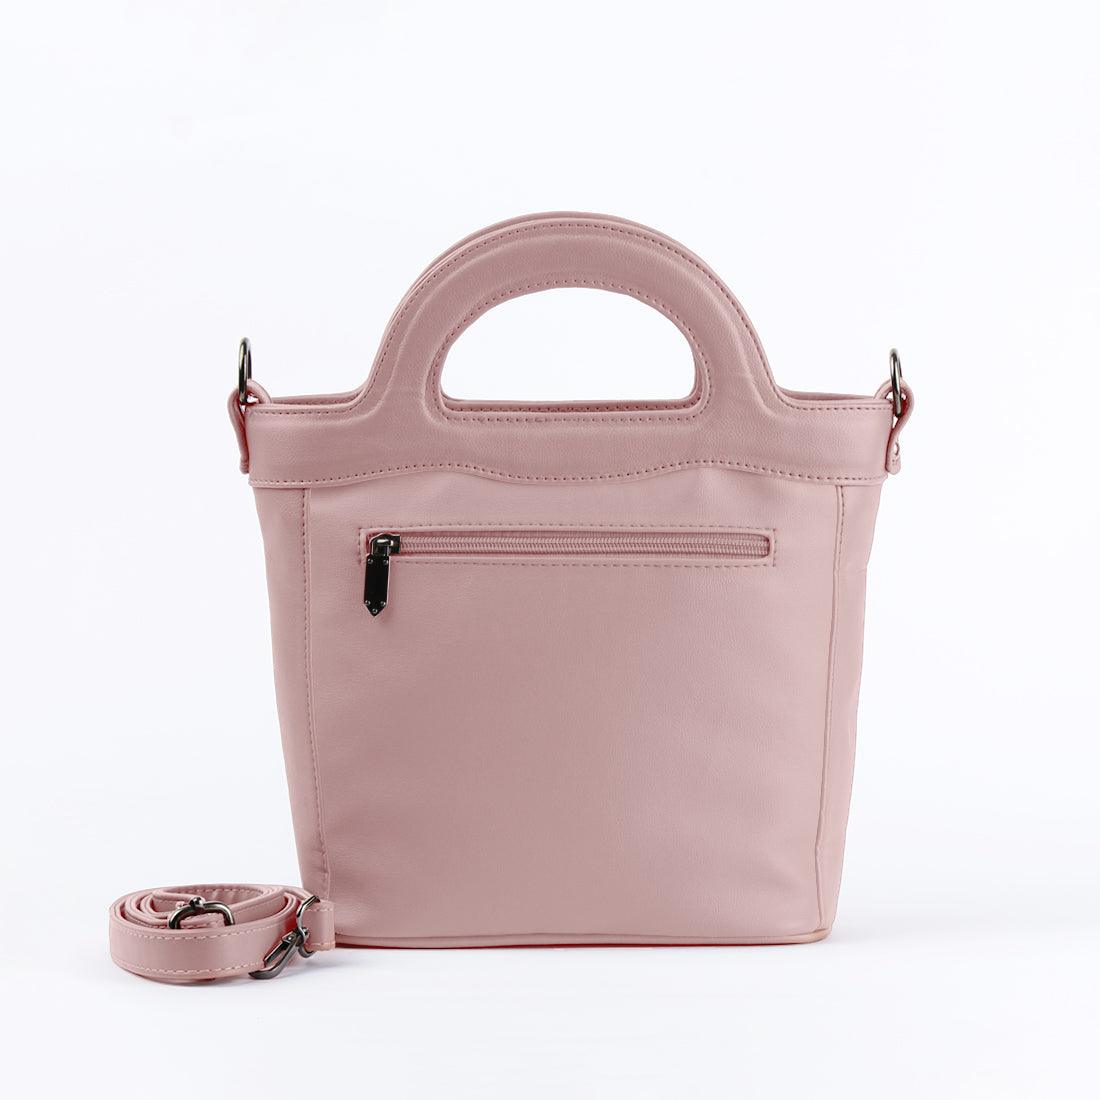 Rose Top Handle Handbag Flamingo Queen - CANVAEGYPT